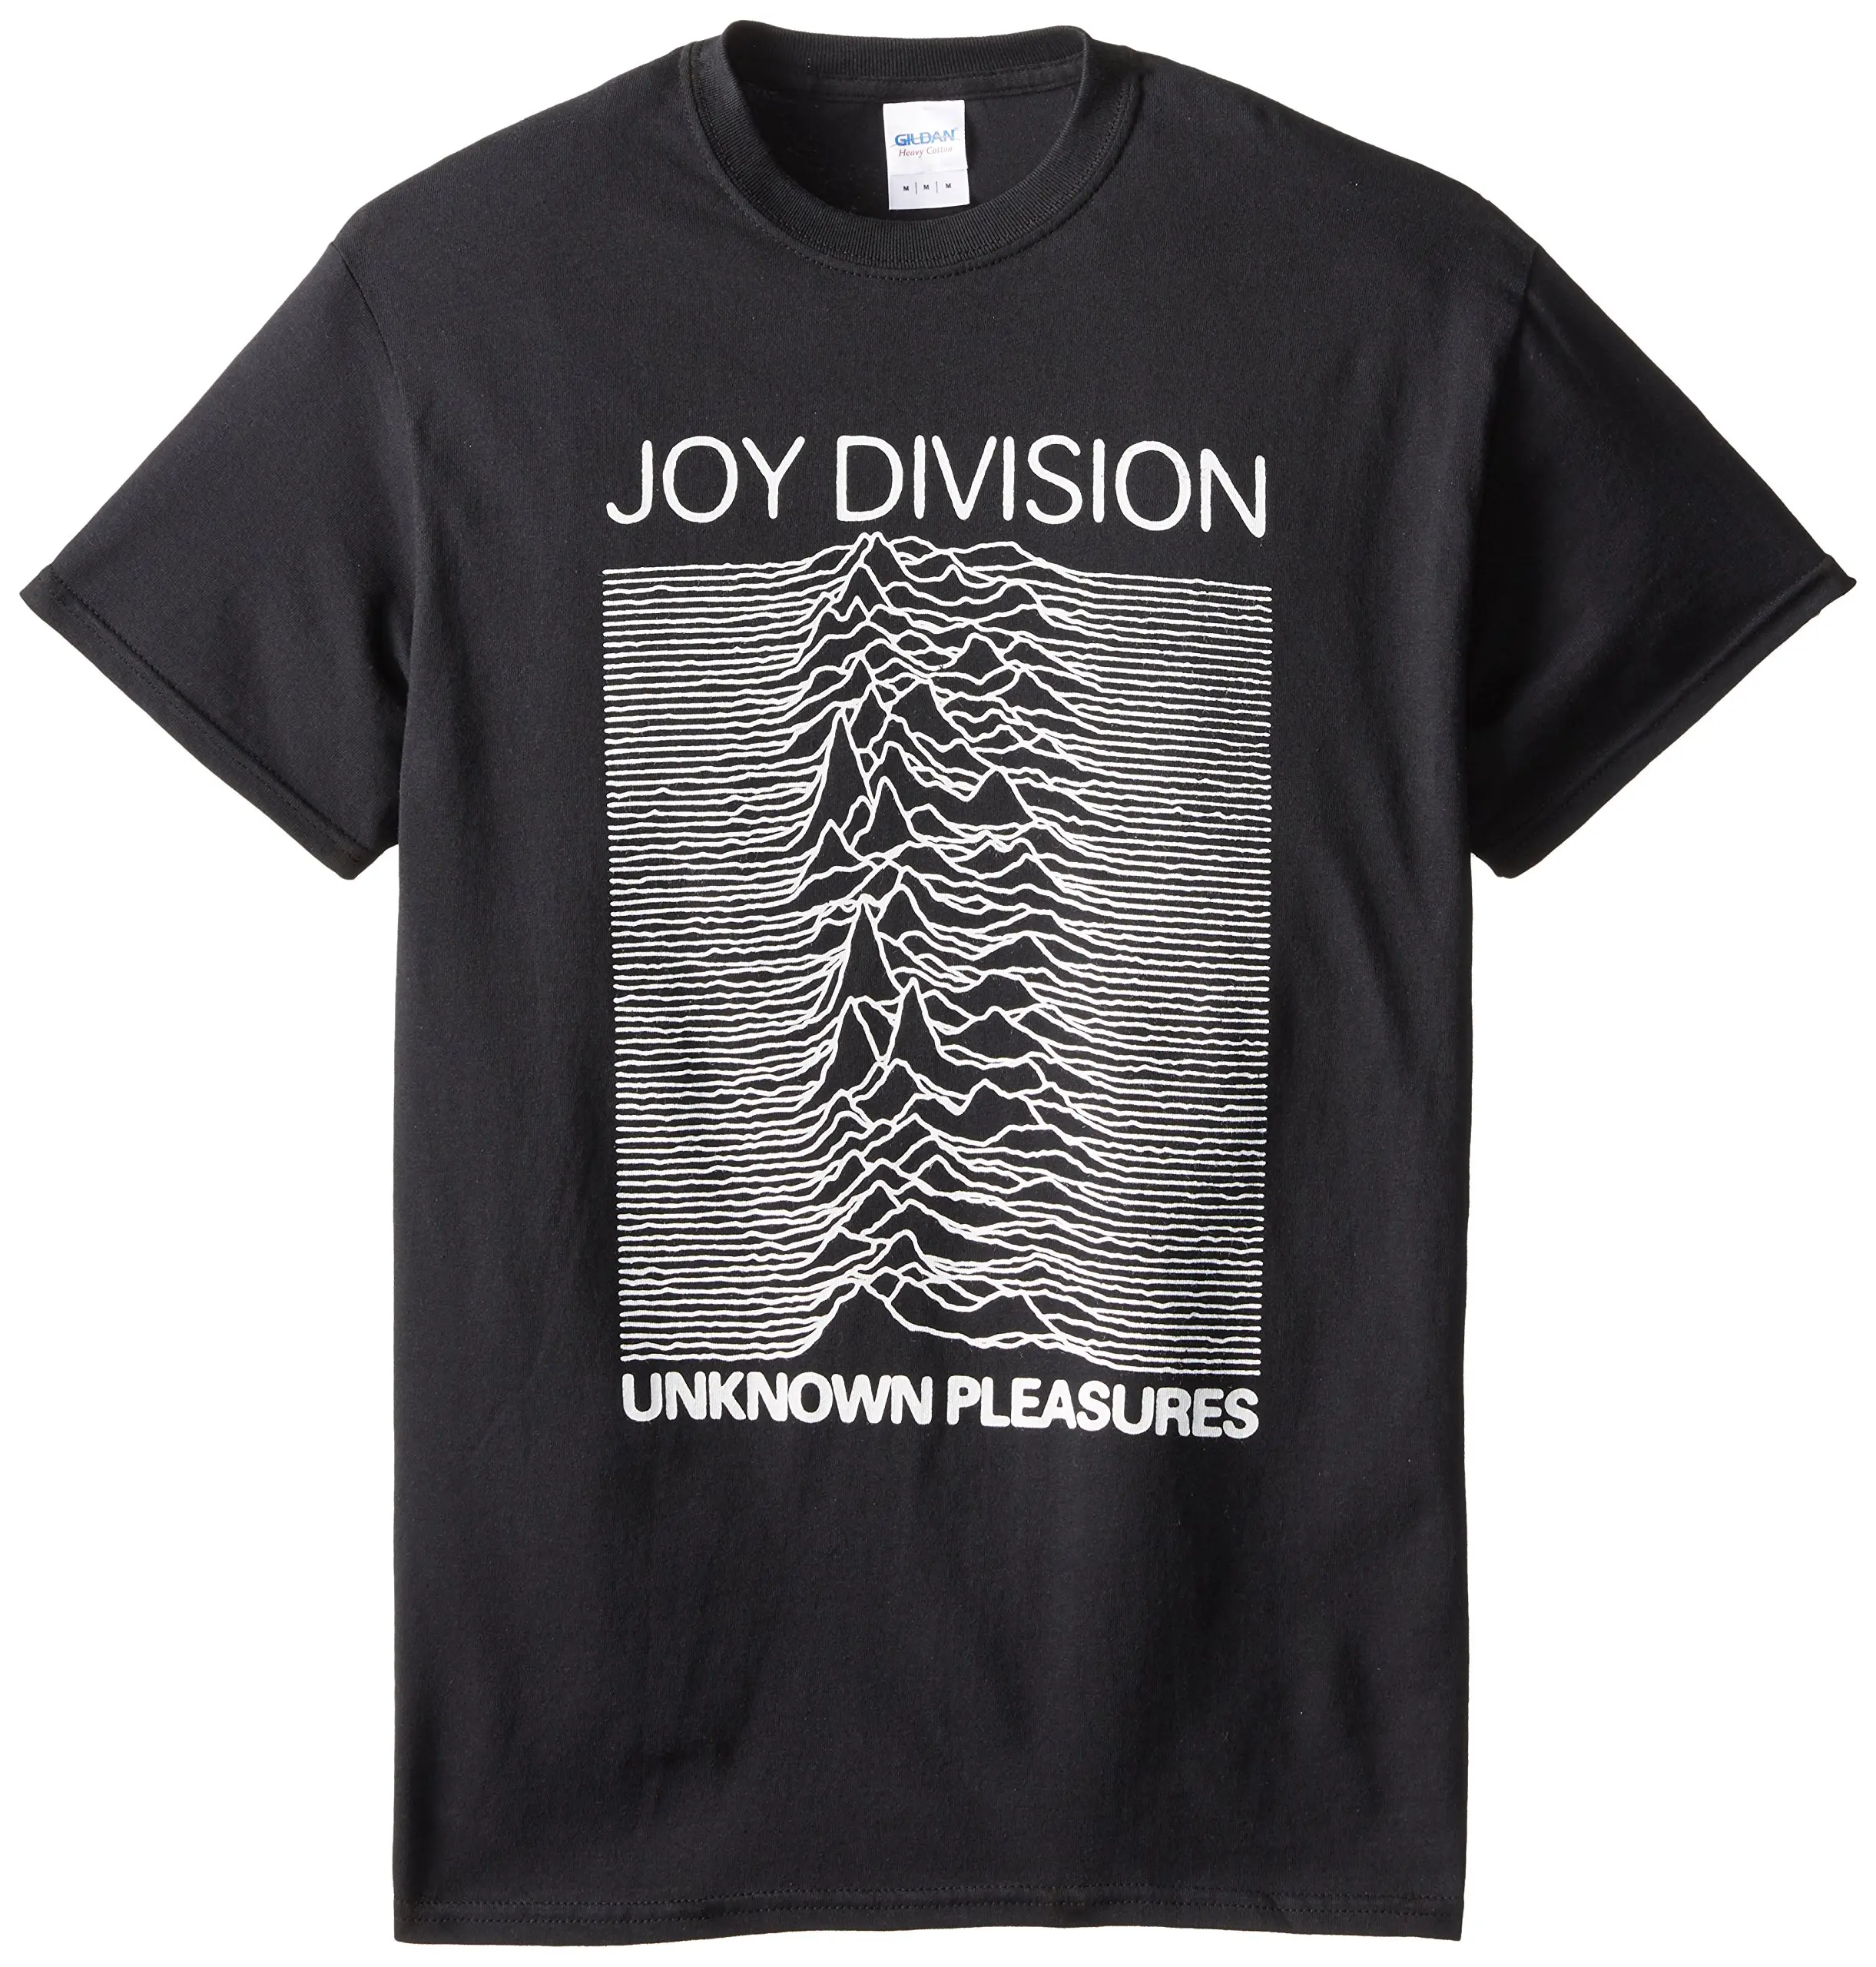 Cheap T Shirt Joy Division, find T Shirt Joy Division deals on line at